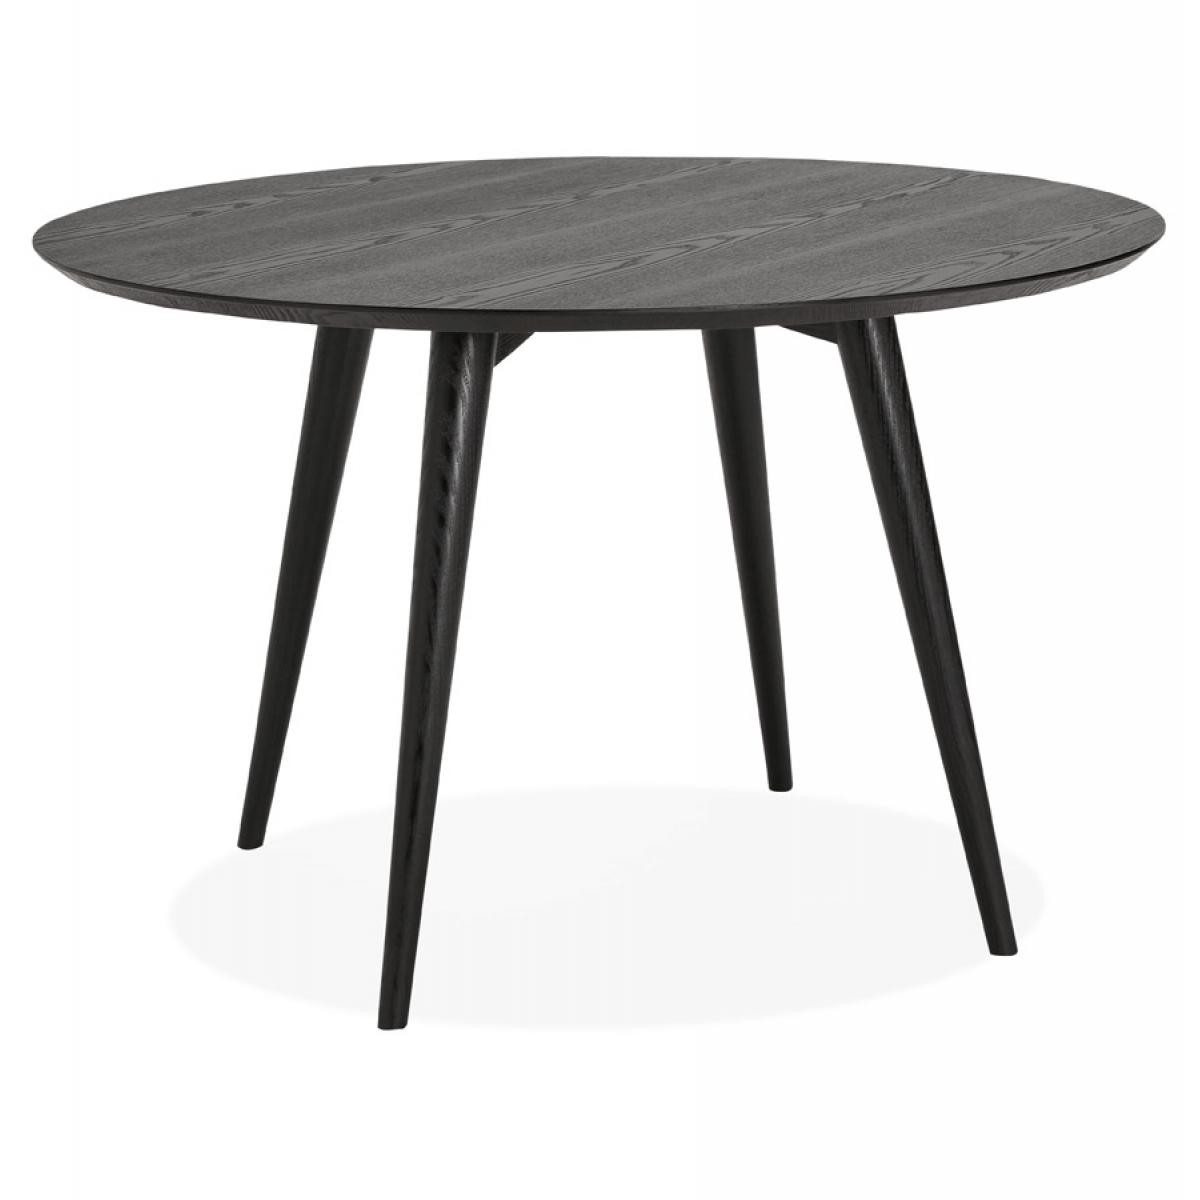 Alterego - Table à dîner ronde 'SWEDY' en bois noir - Ø 120 cm - Tables à manger